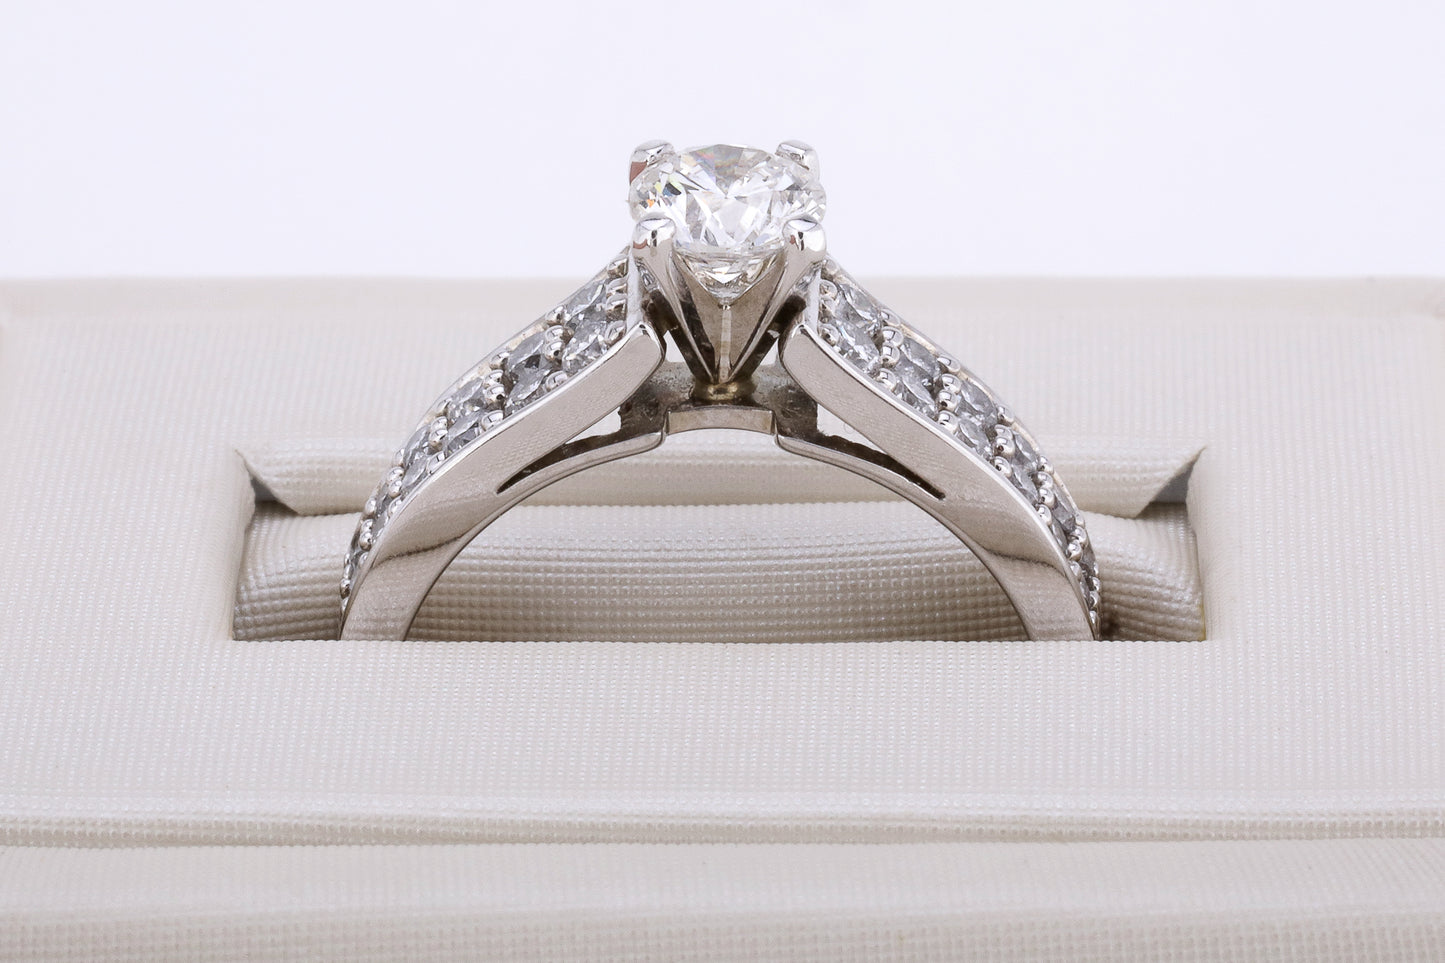 19k White Gold 1.7 ctw Diamond Engagement Ring